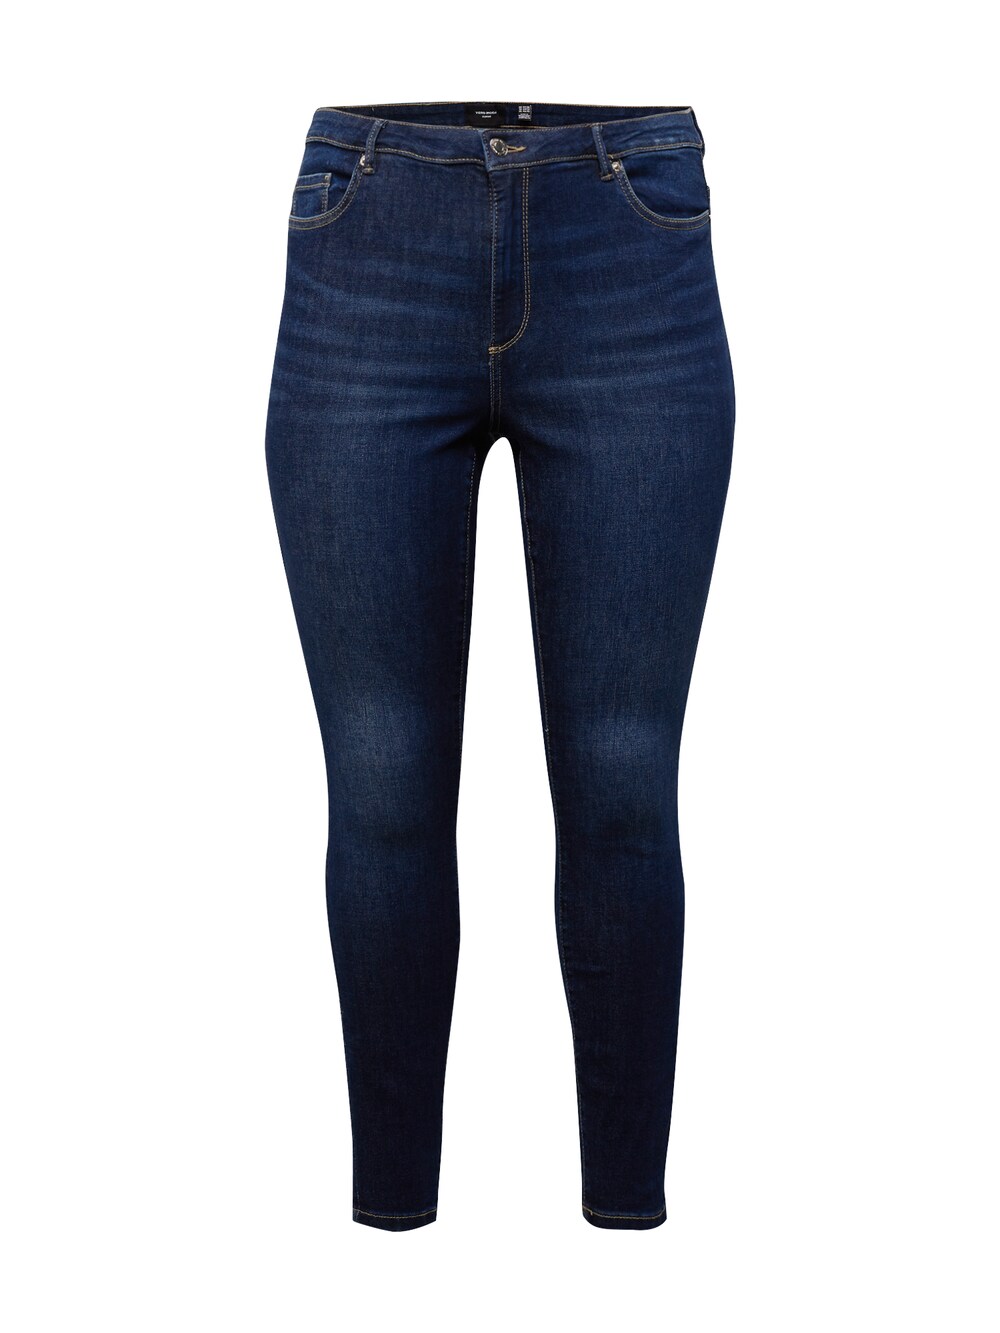 Узкие джинсы Vero Moda Phia, темно-синий